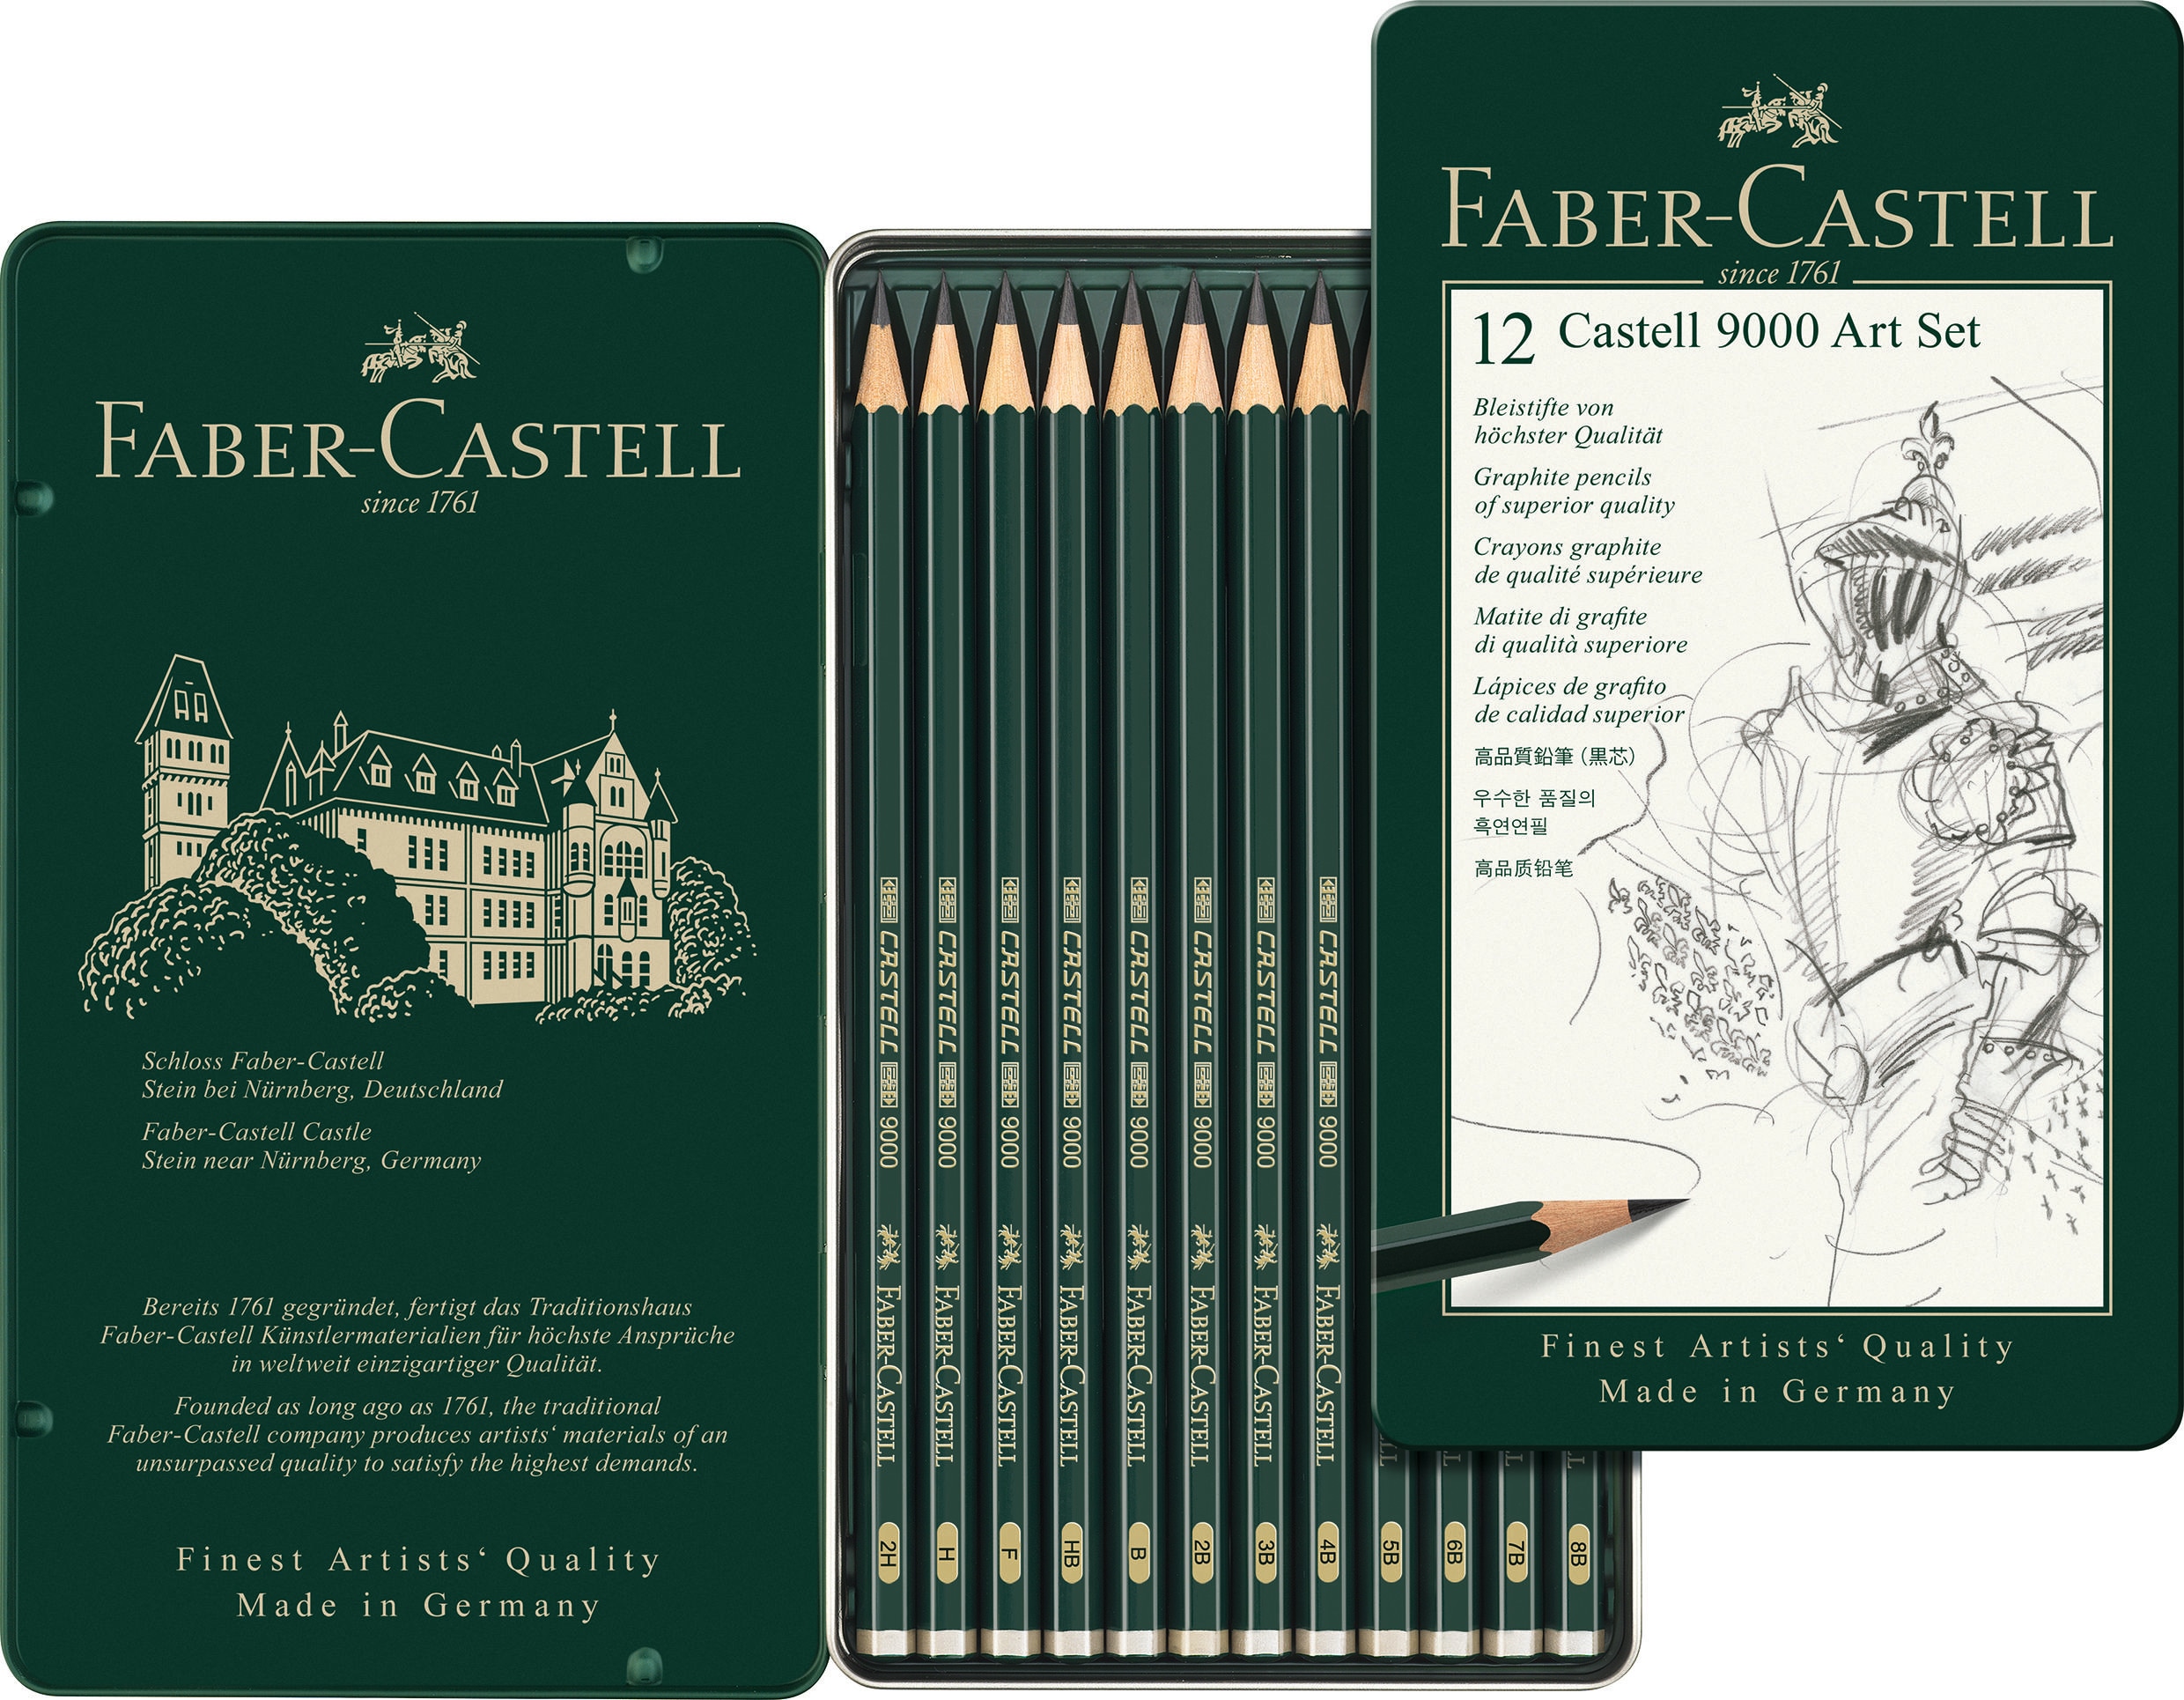 Faber-Castell Pitt Graphite Tin (Set of 26)